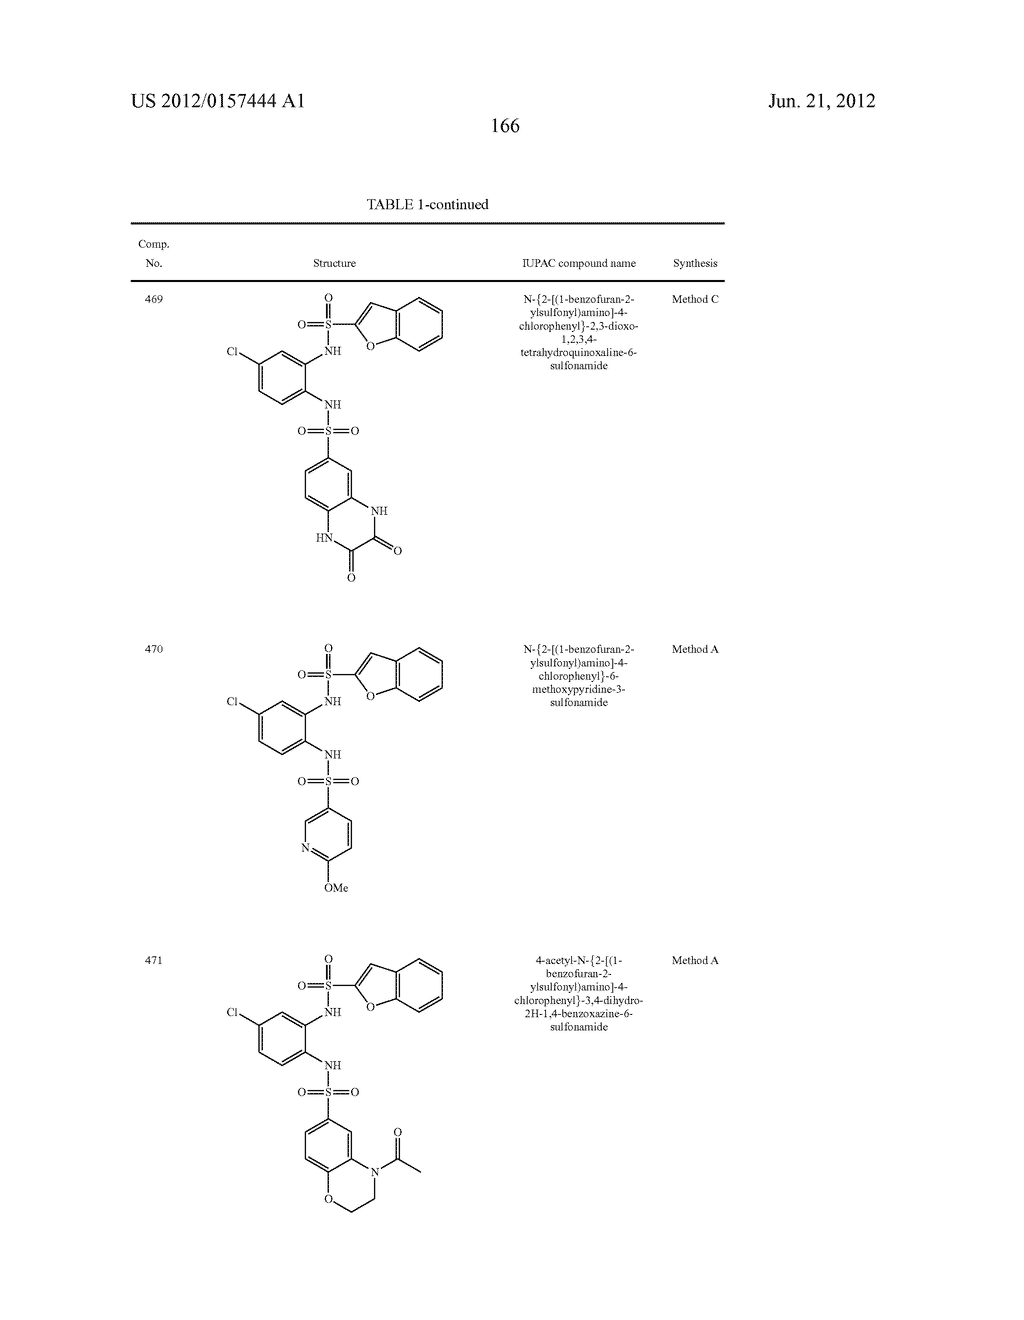 NOVEL 1,2- BIS-SULFONAMIDE DERIVATIVES AS CHEMOKINE RECEPTOR MODULATORS - diagram, schematic, and image 167